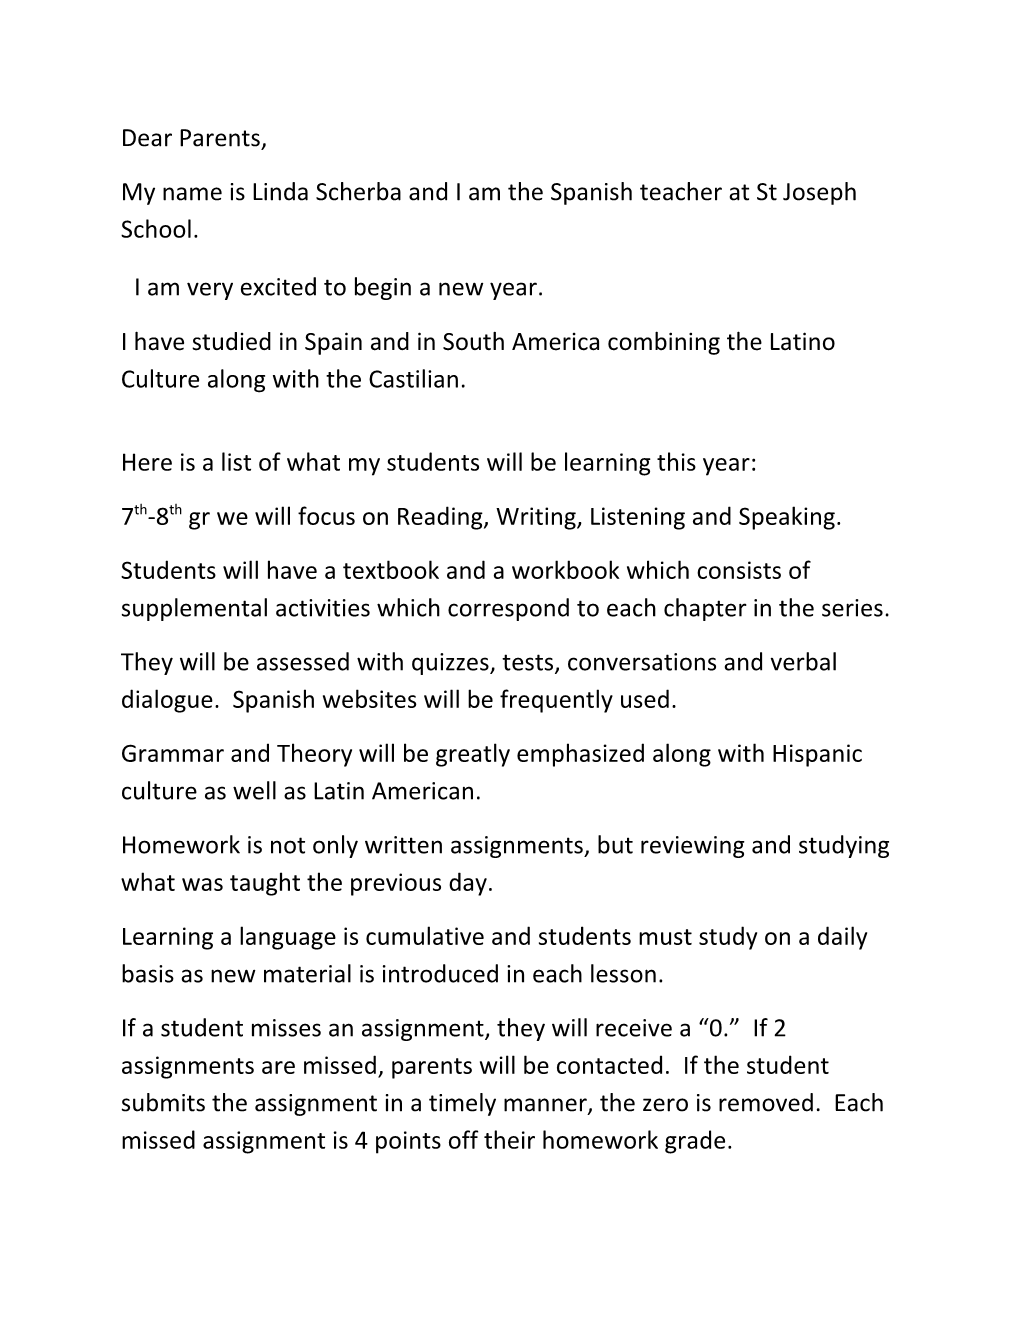 My Name Is Linda Scherba and I Am the Spanish Teacher at St Joseph School